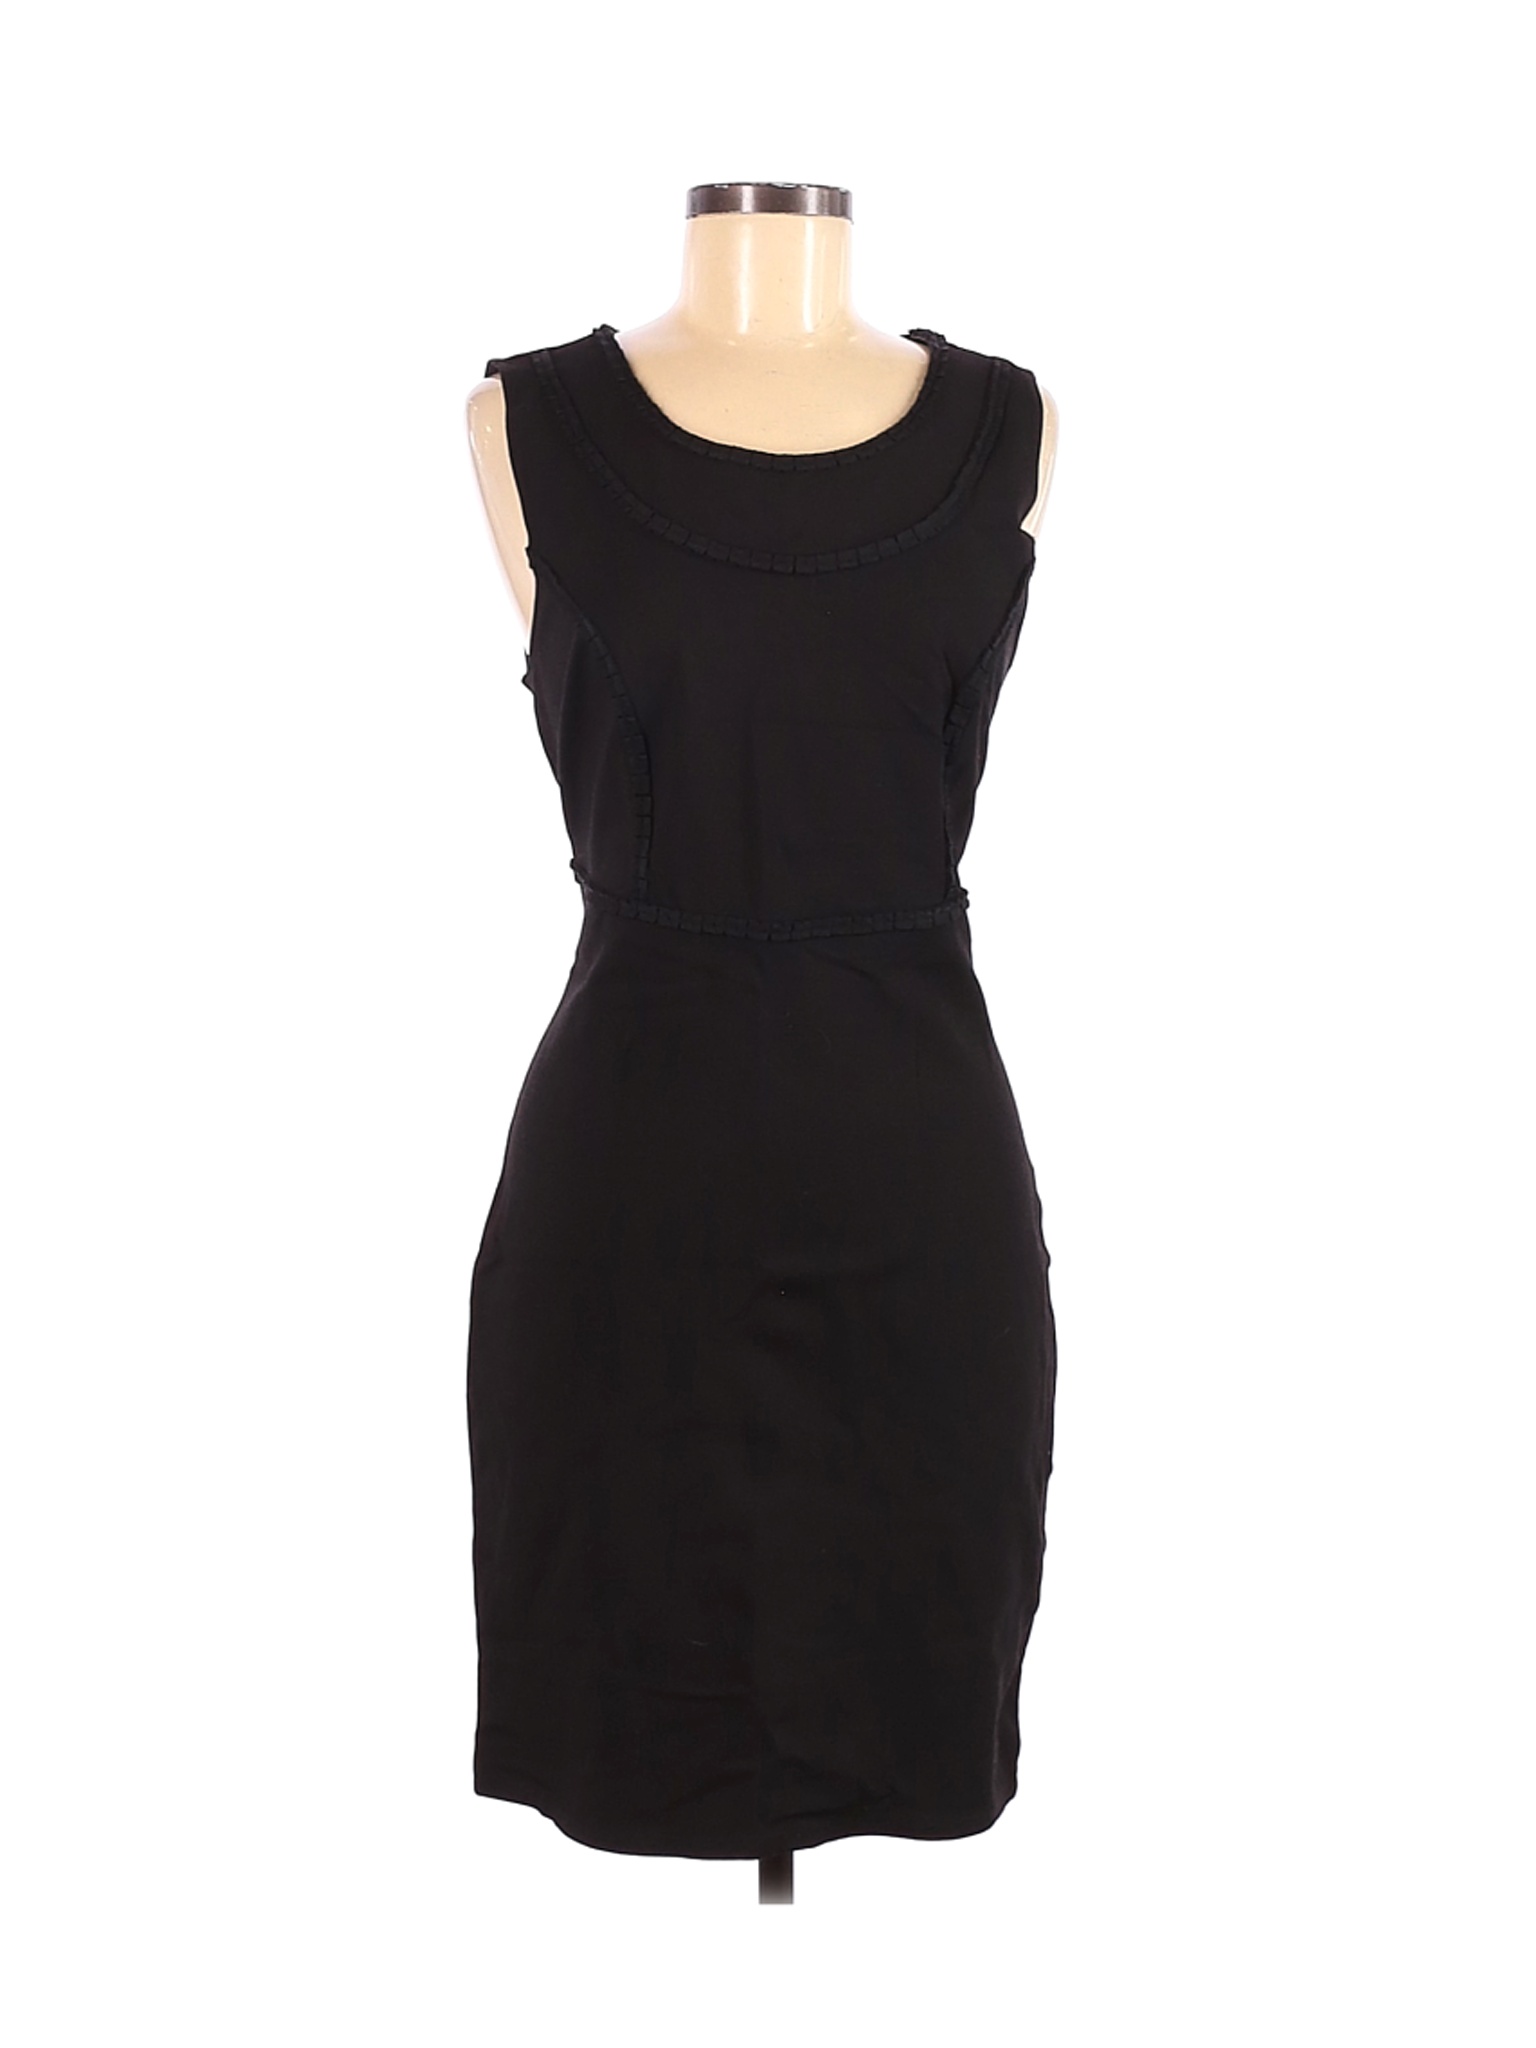 Philosophy Republic Clothing Women Black Casual Dress L | eBay